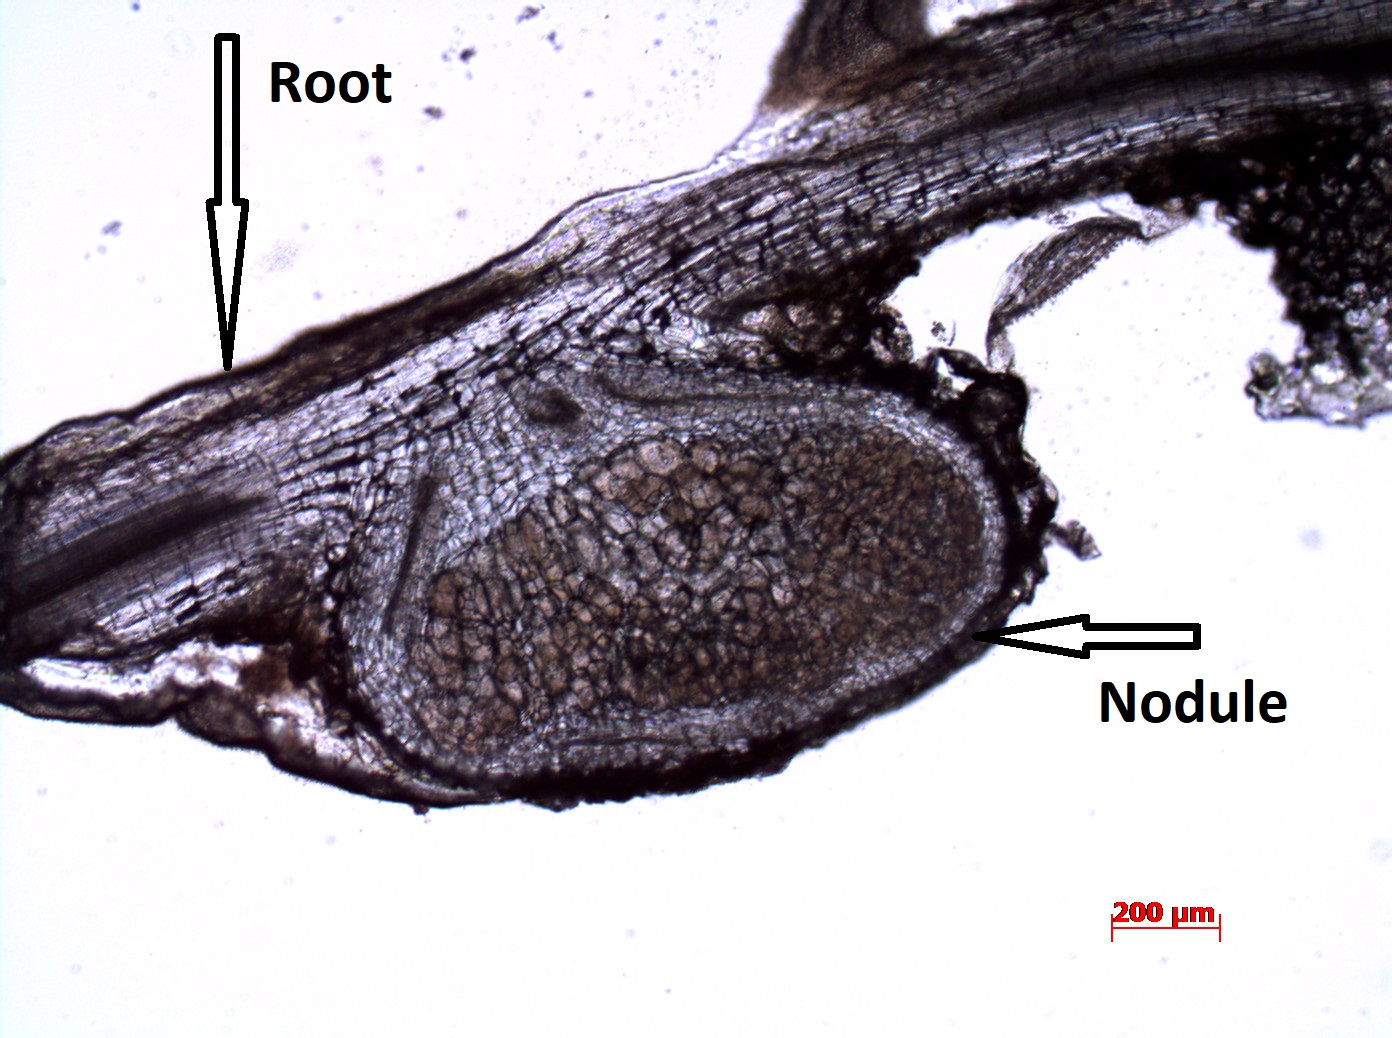 Nodule under light microscope